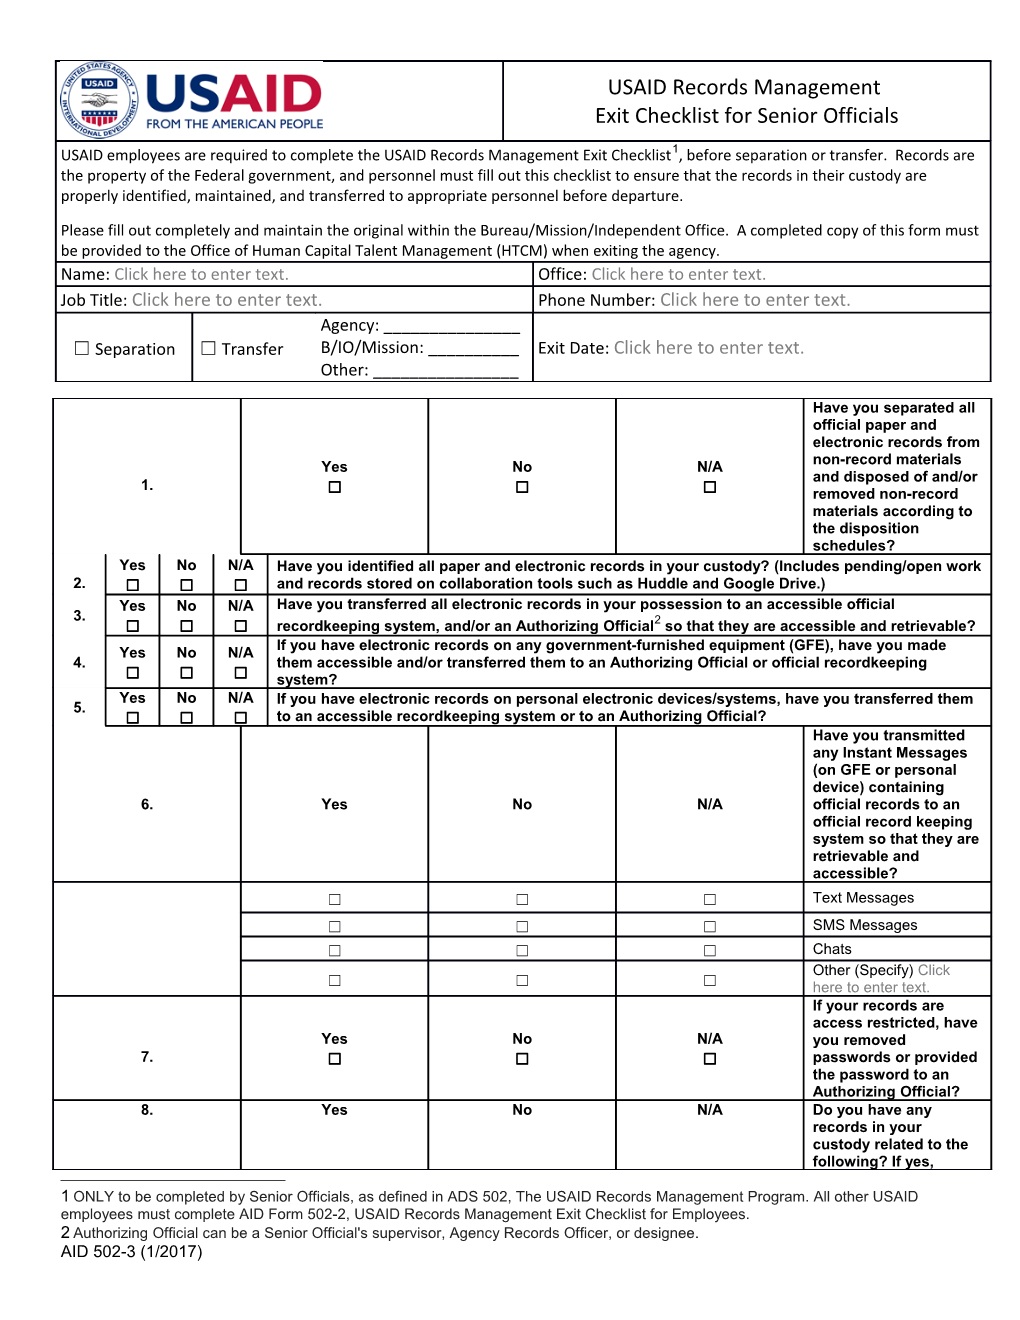 USAID Records Management Exit Checklist for Senior Officials